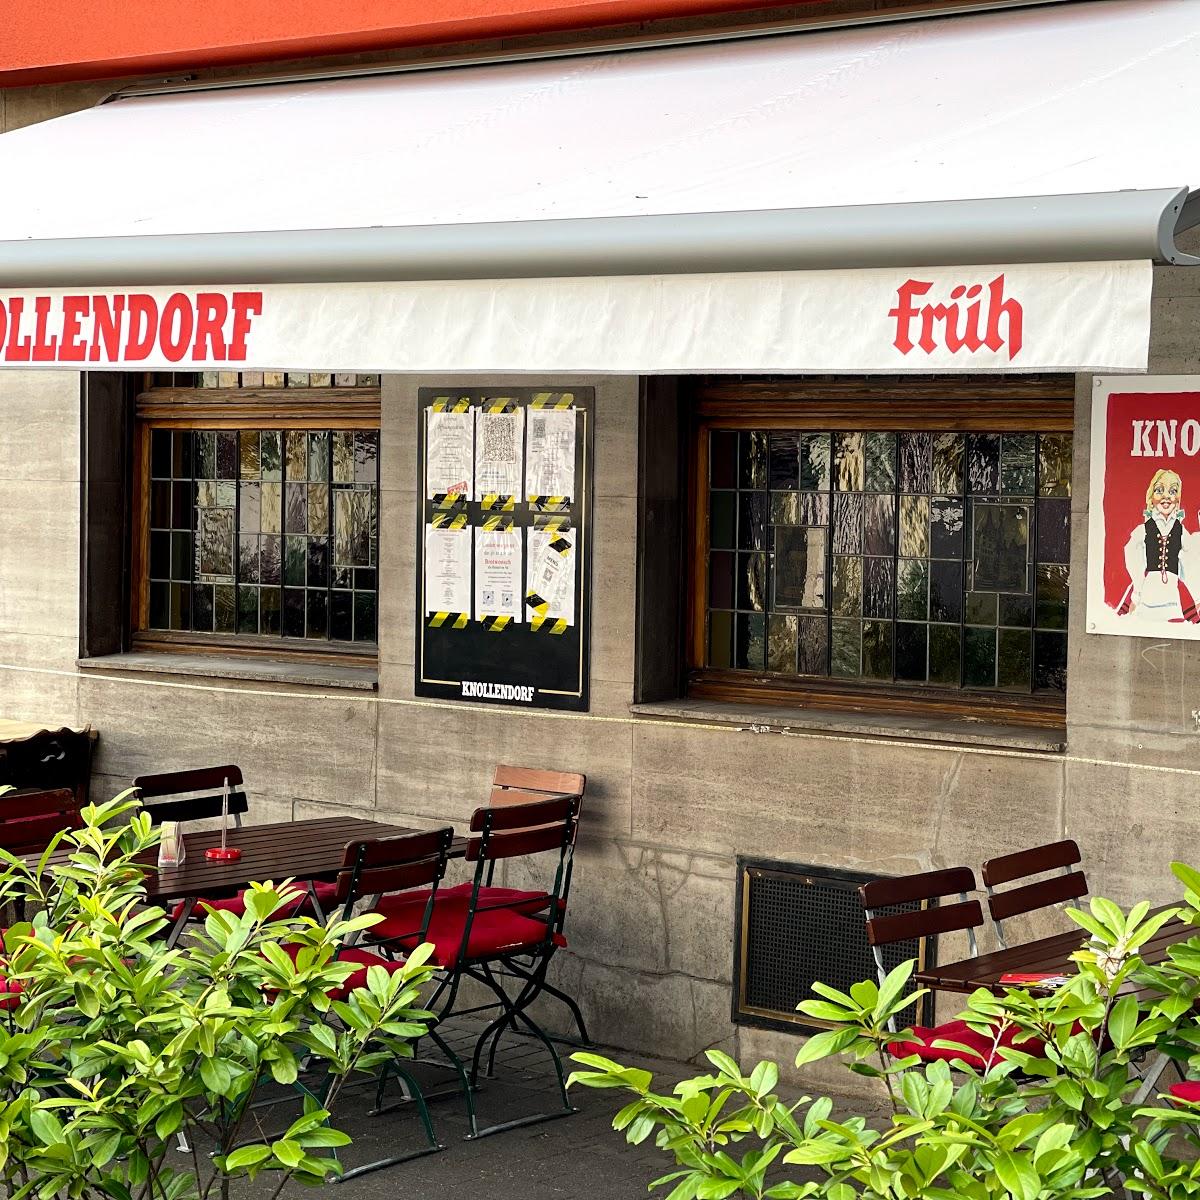 Restaurant "Knollendorf" in Köln